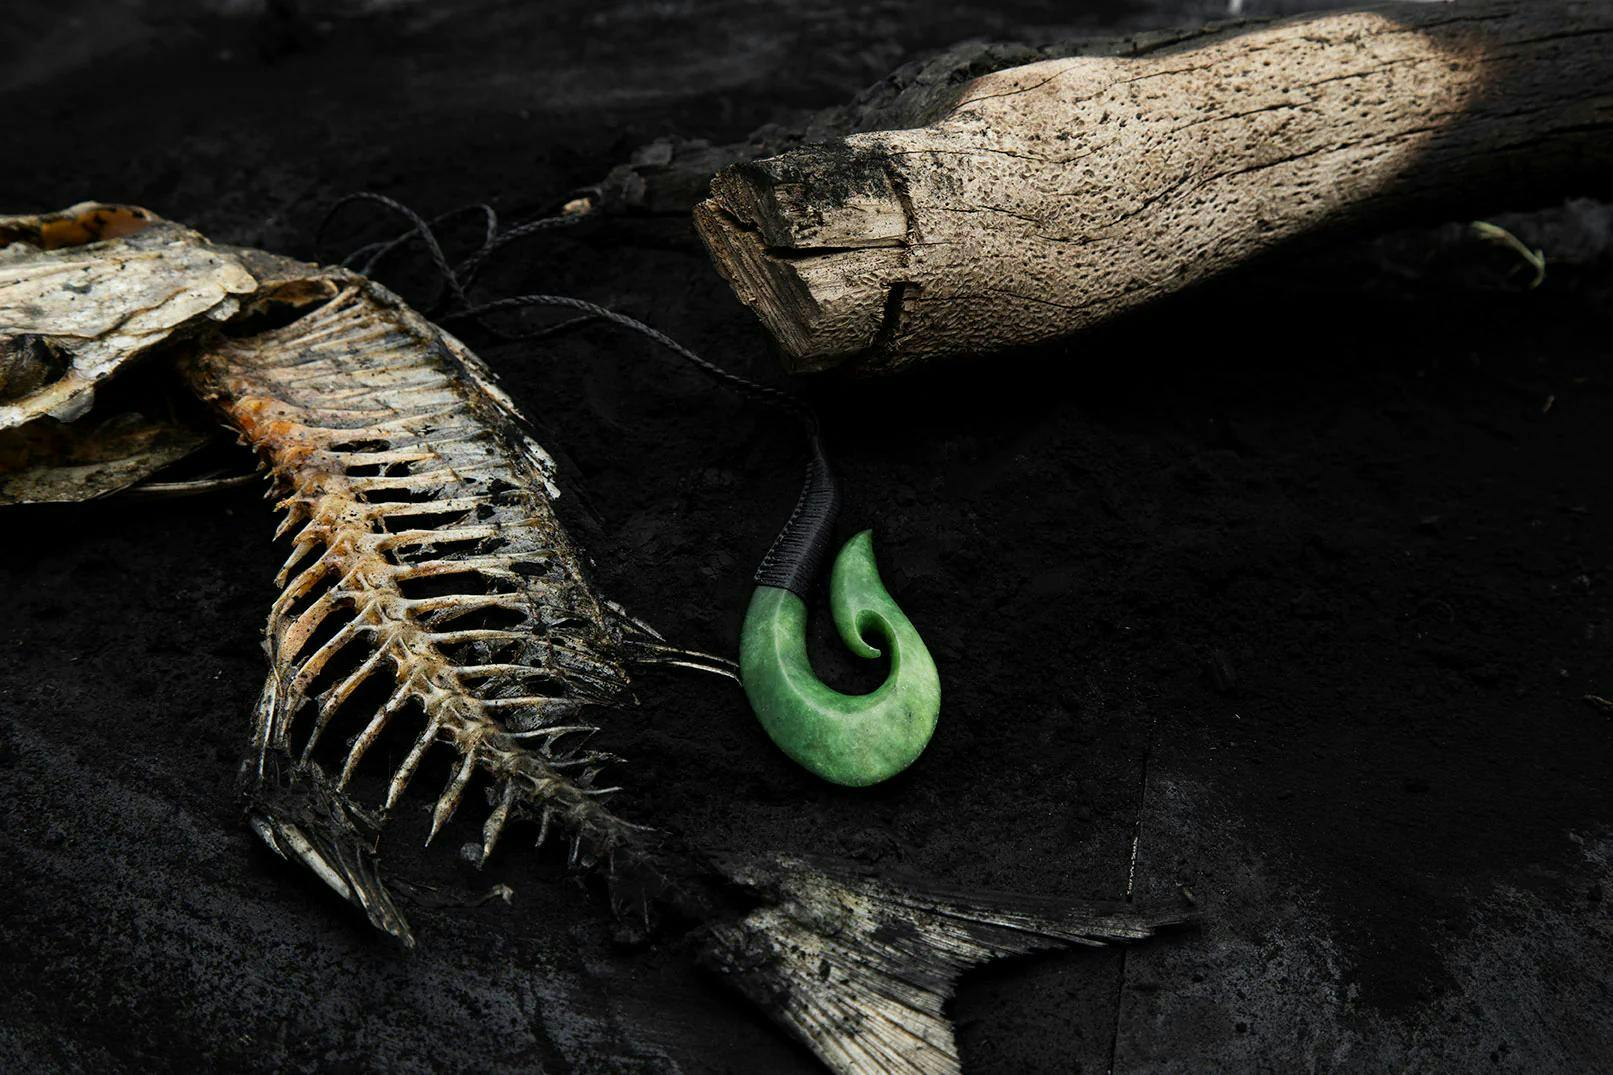 Hei matau pendant amongst fish skeleton and a log